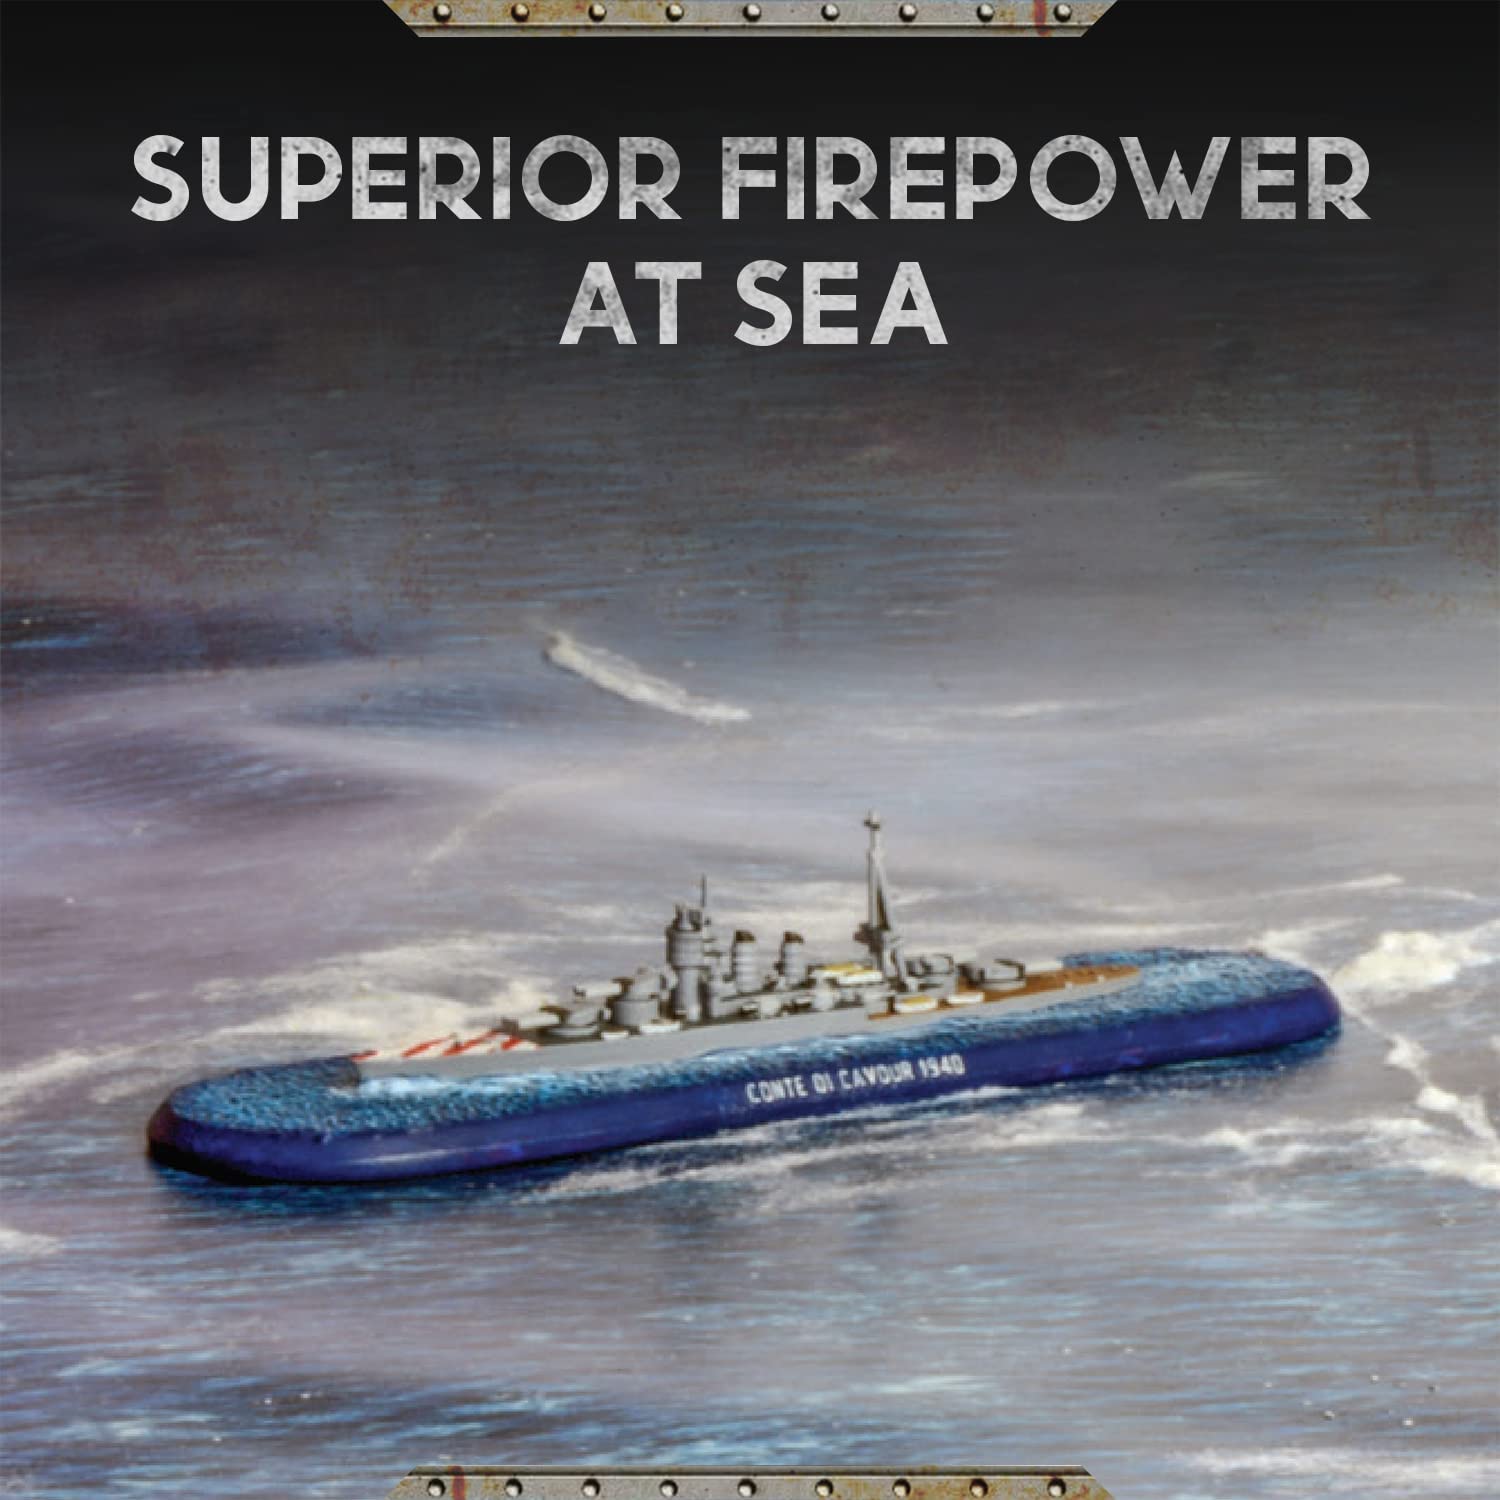 Victory at Sea - Regia Marina: Regia Marina Fleet